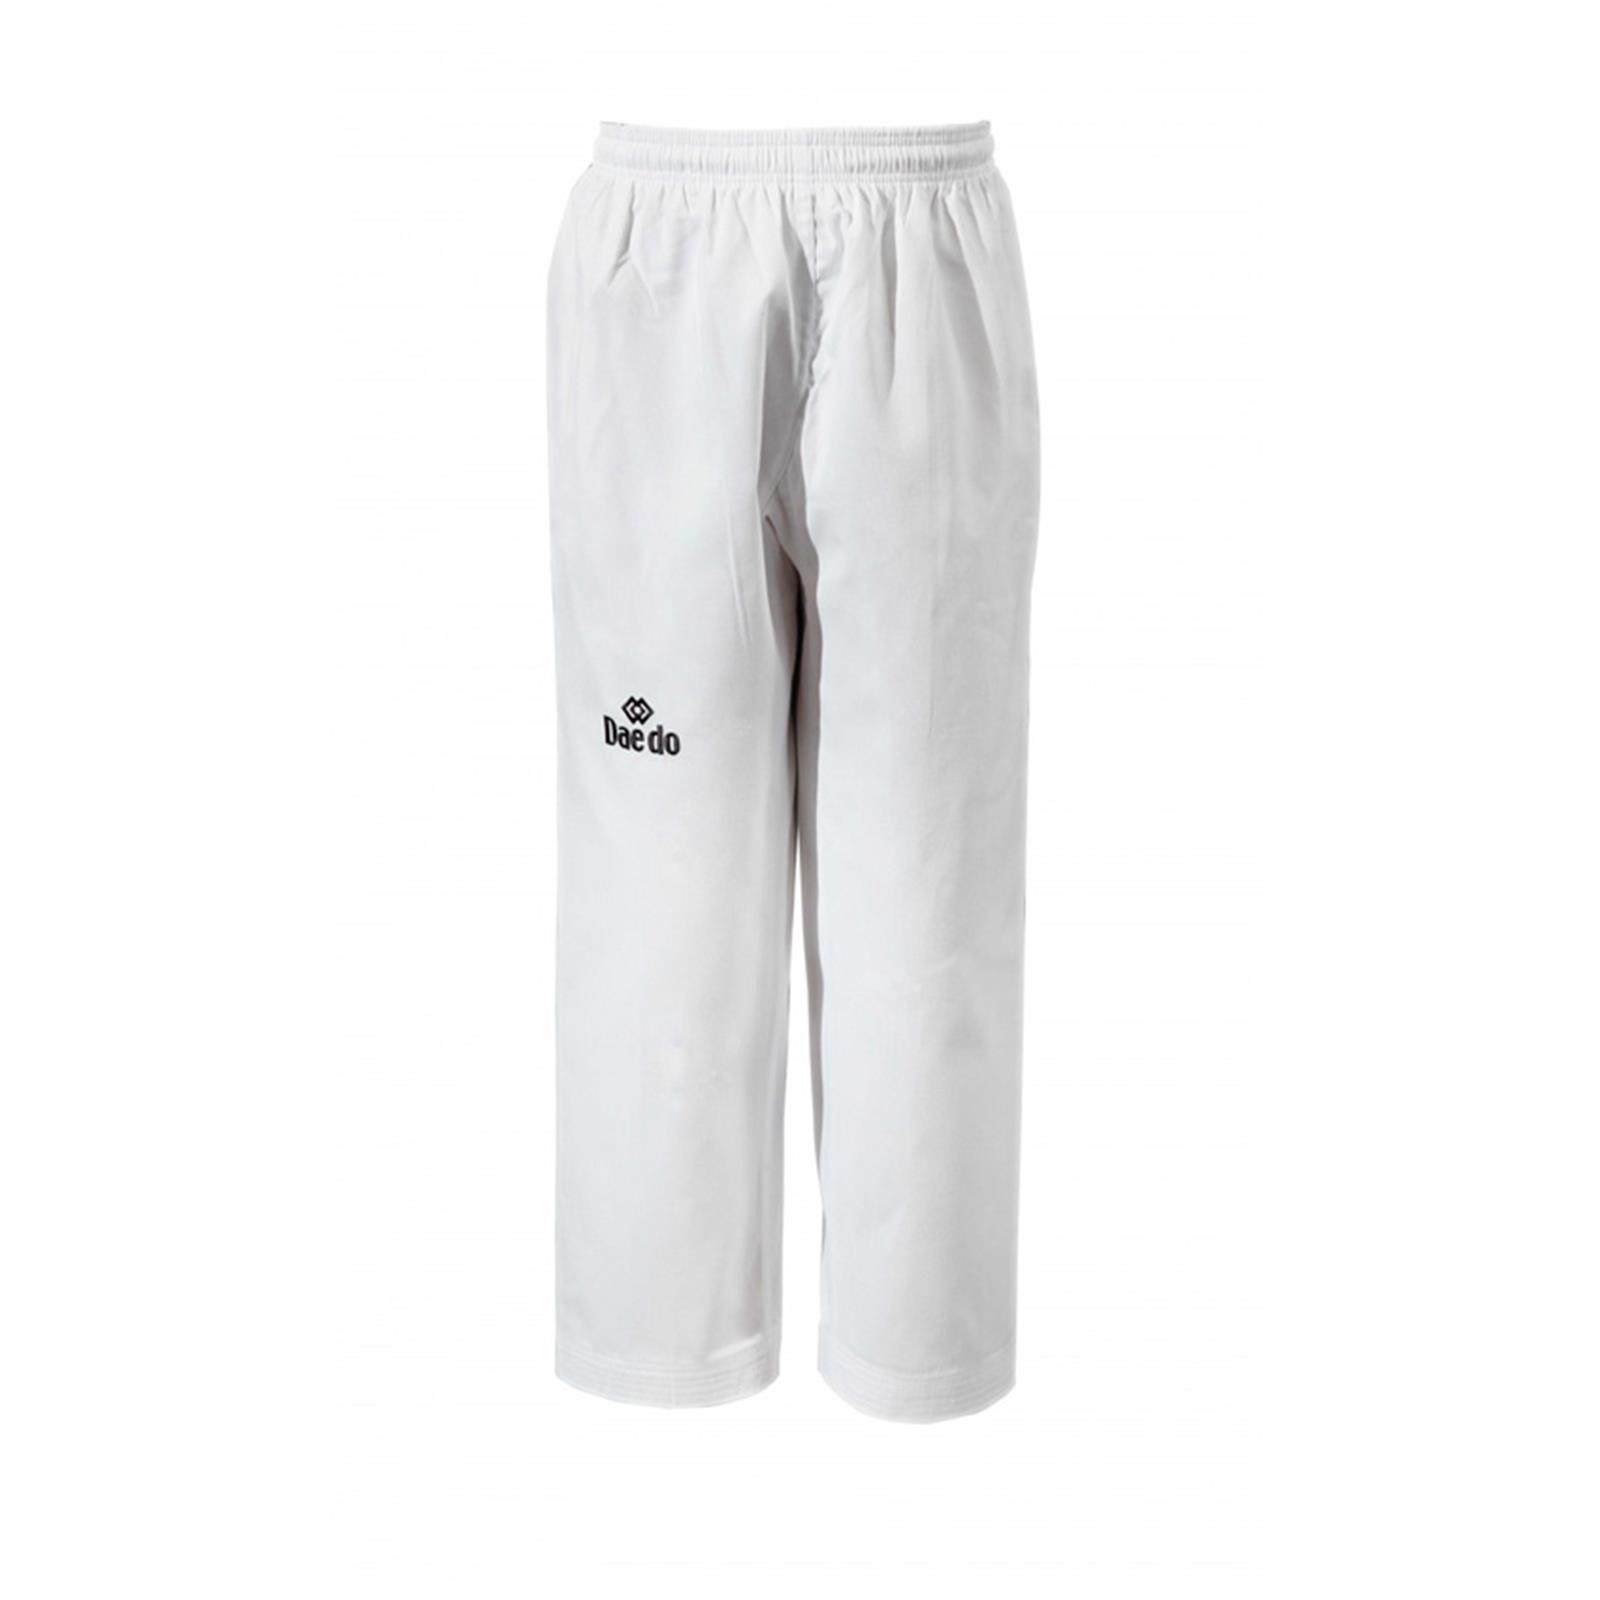 Dae Do Pantalone per Dobok Bianco (5° - 180cm - BIANCO)